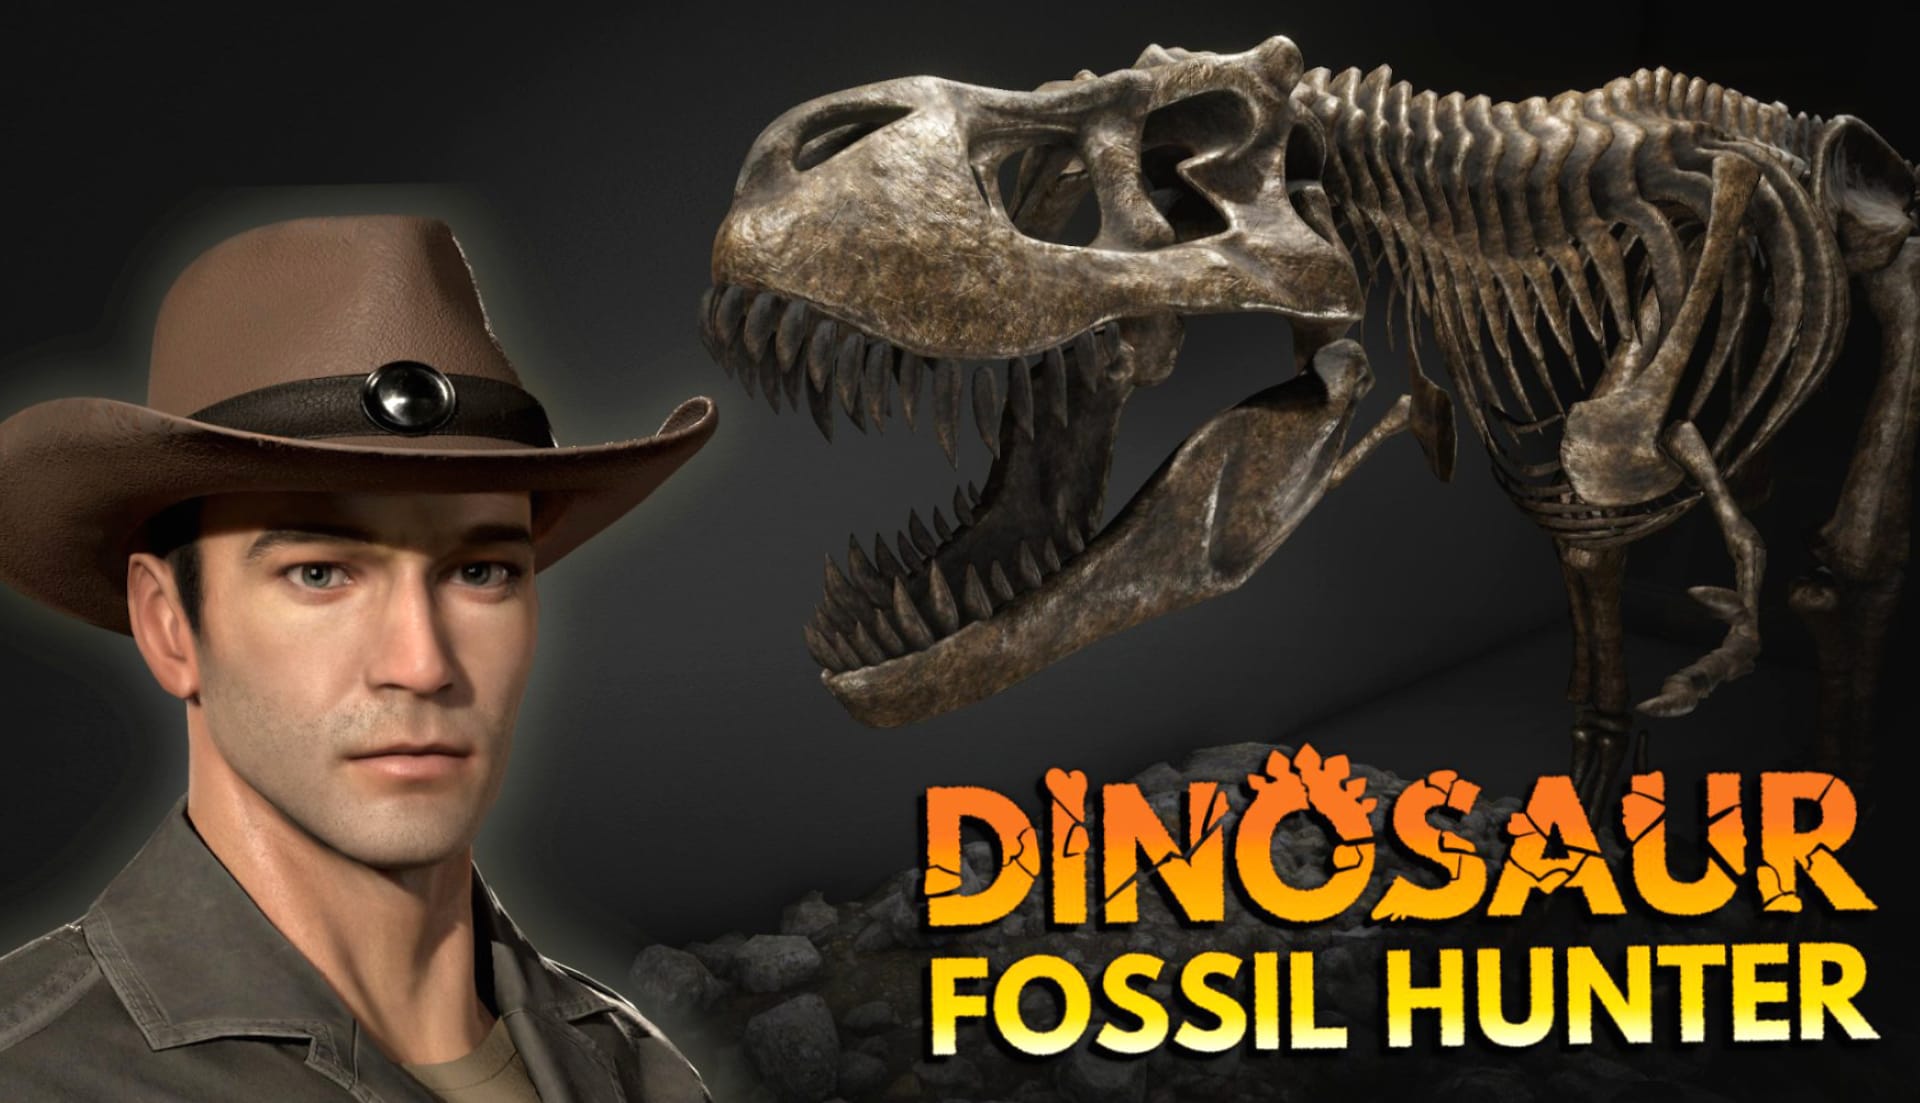 Dinosaur Fossil Hunter wallpapers HD quality